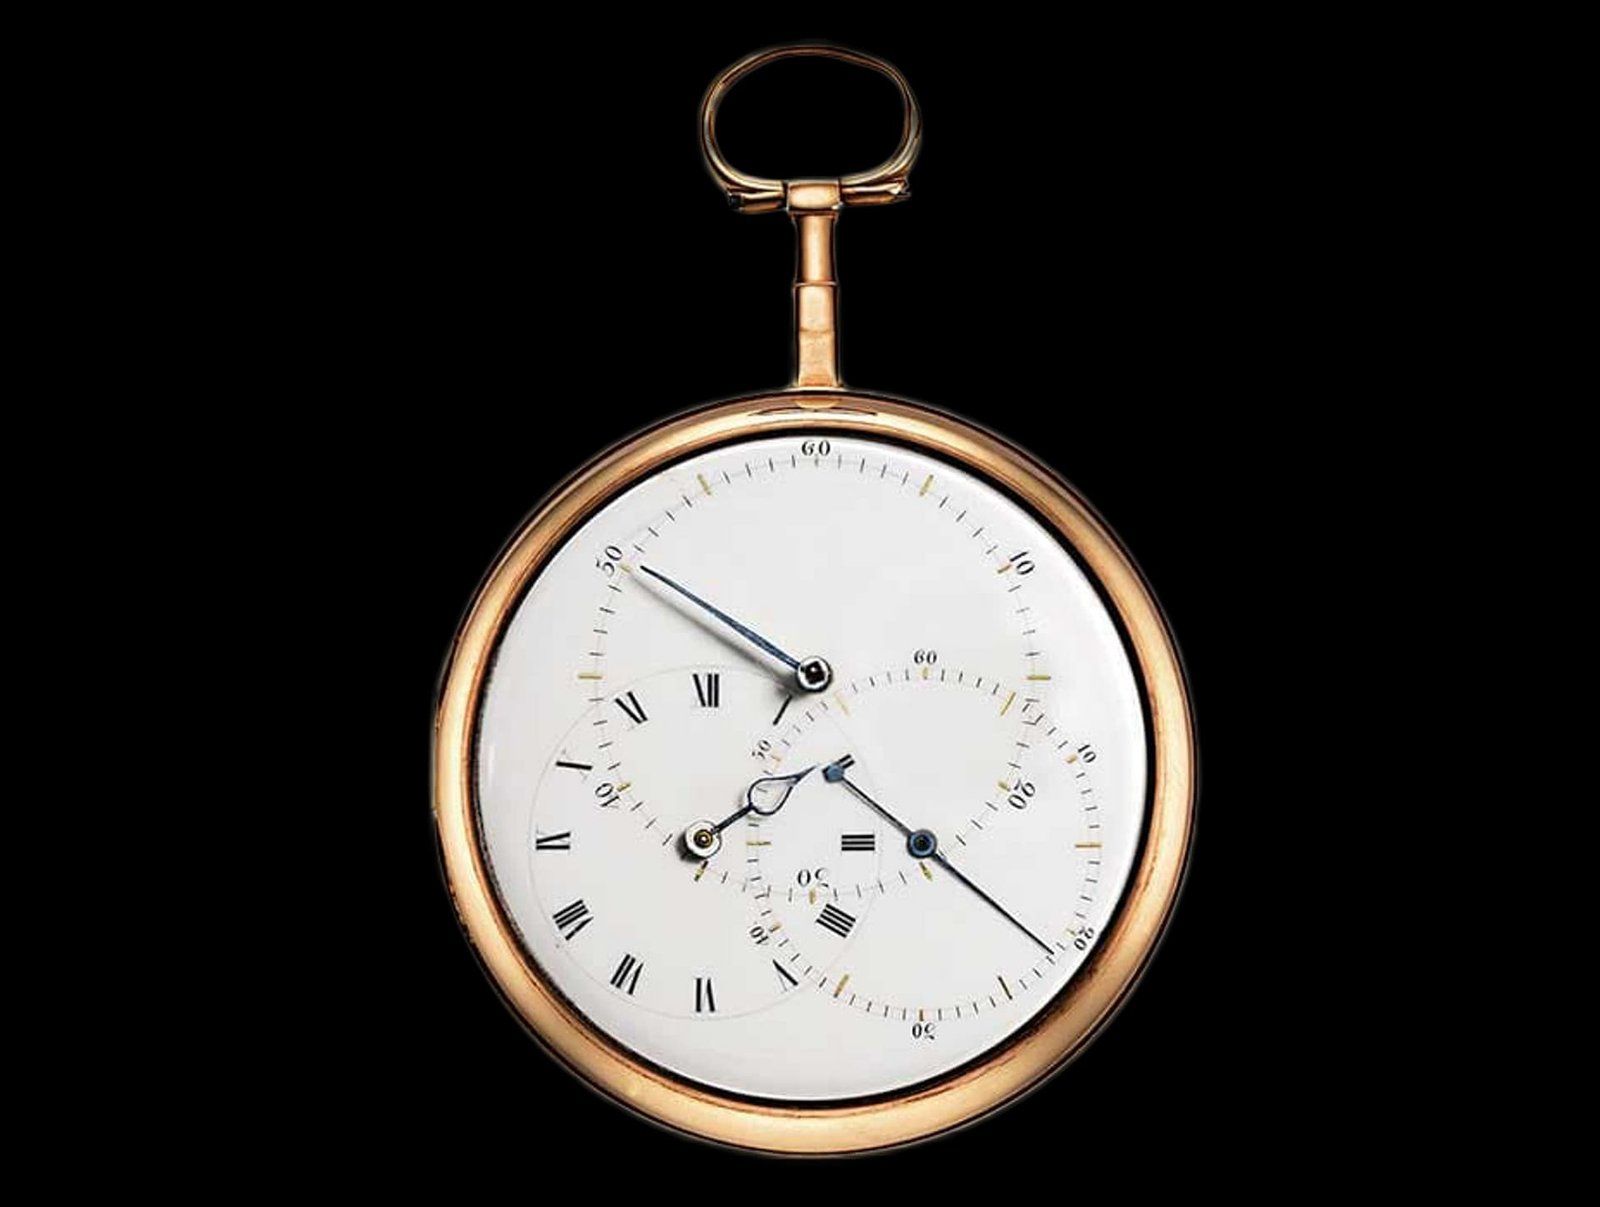 Pocket chronometer by Johann Heinrich Seyffert